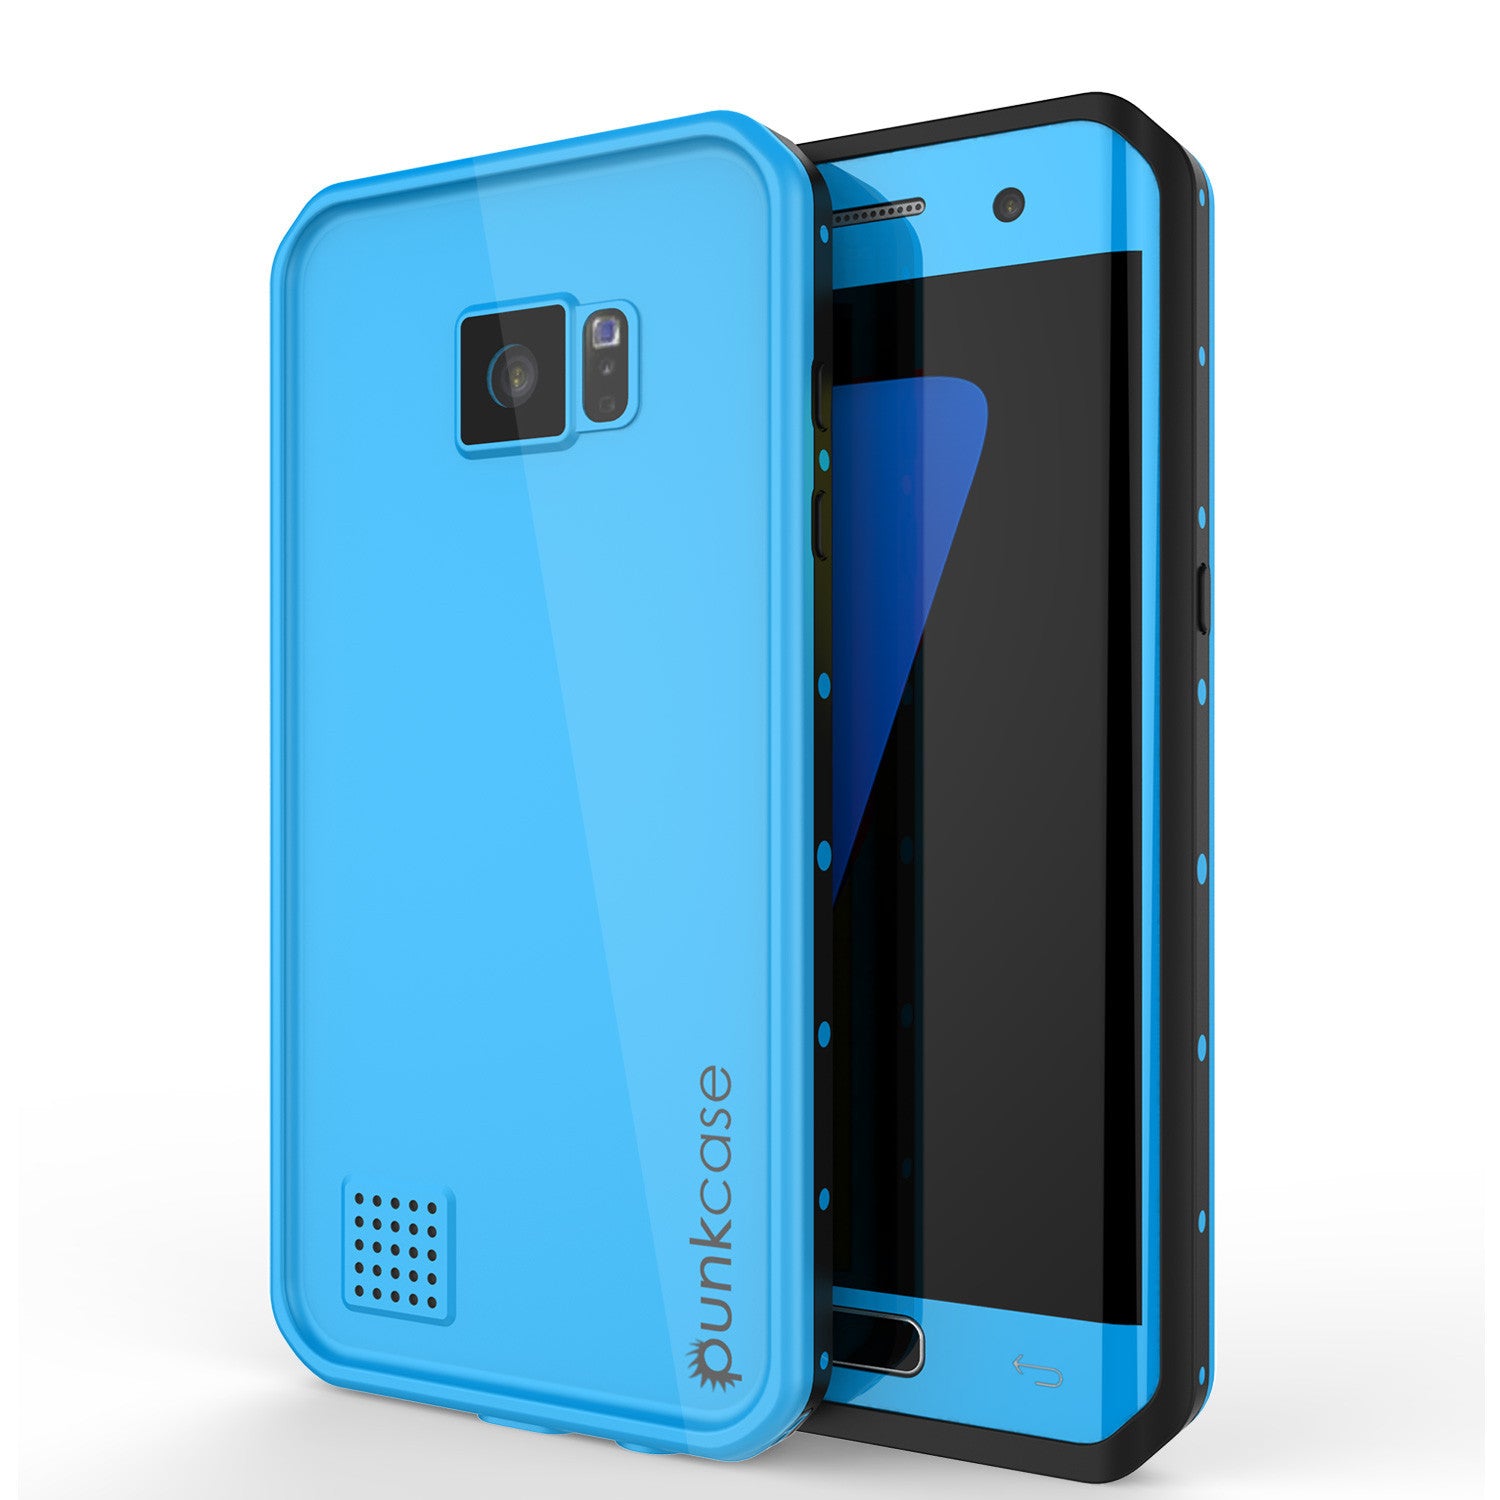 Galaxy S7 EDGE Waterproof Case PunkCase StudStar Light Blue Thin 6.6ft Underwater IP68 ShockProof (Color in image: light blue)